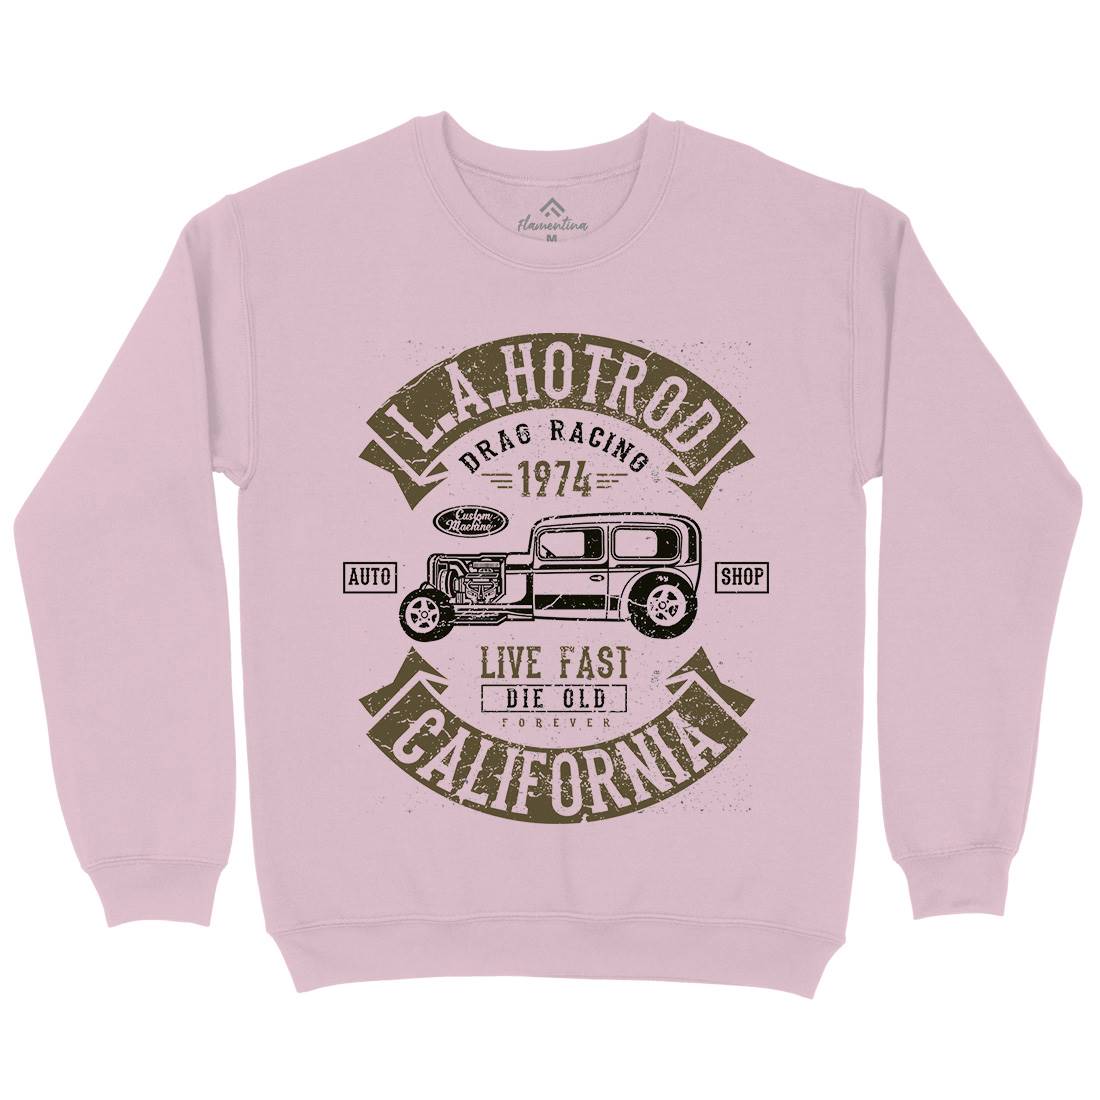 La Hotrod Kids Crew Neck Sweatshirt Cars A080